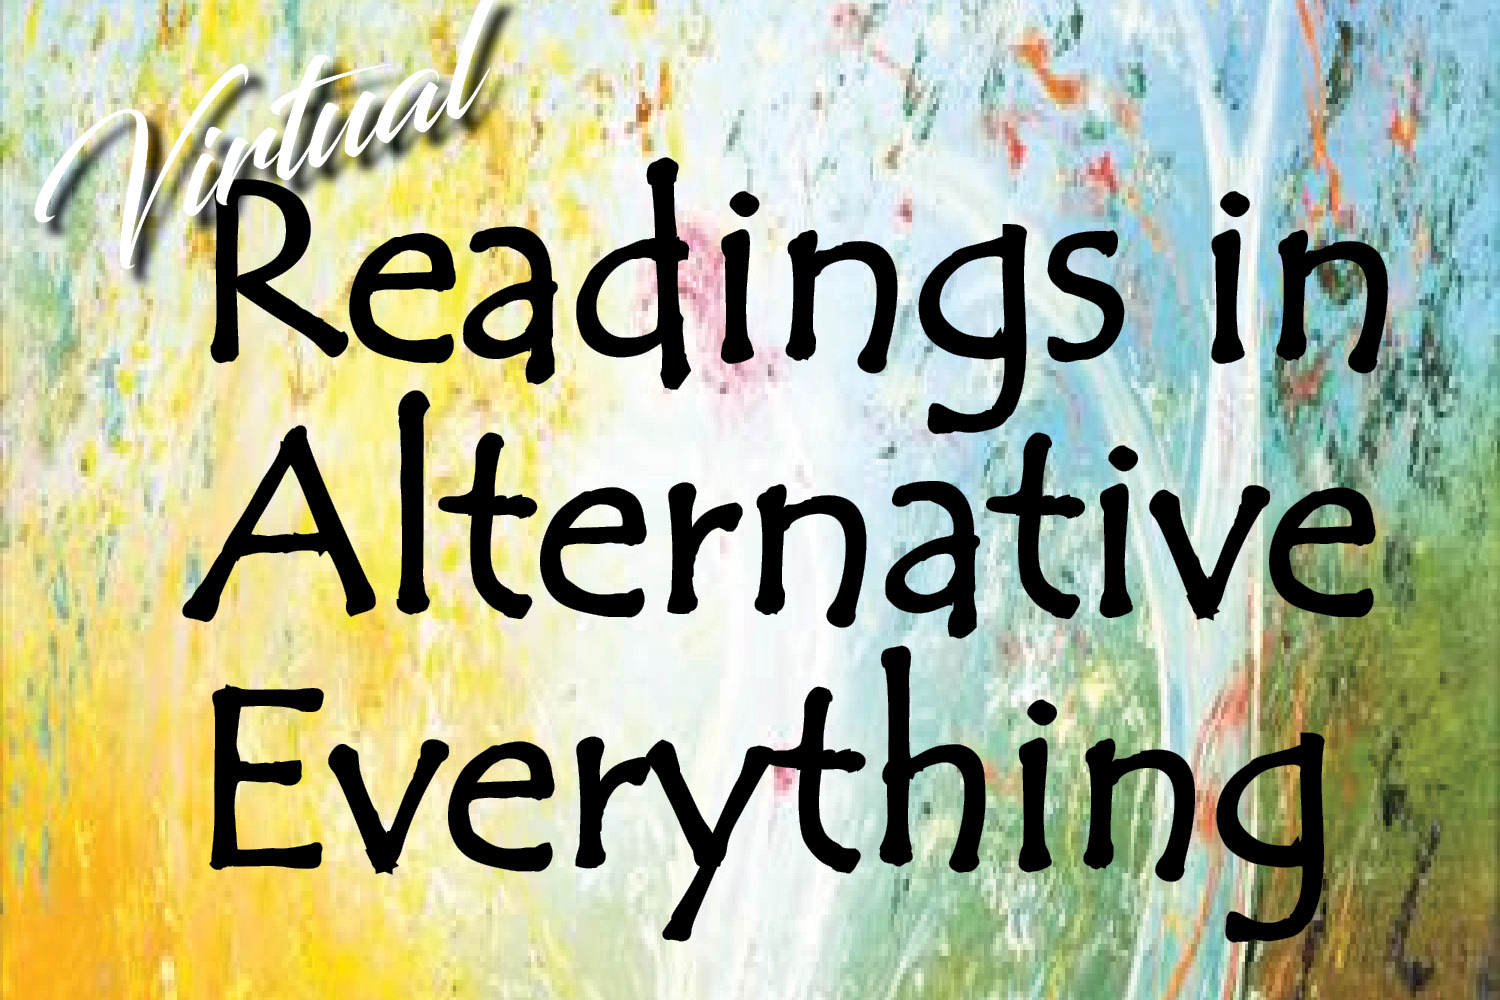 Readings in Alternative Everything Book Club logo